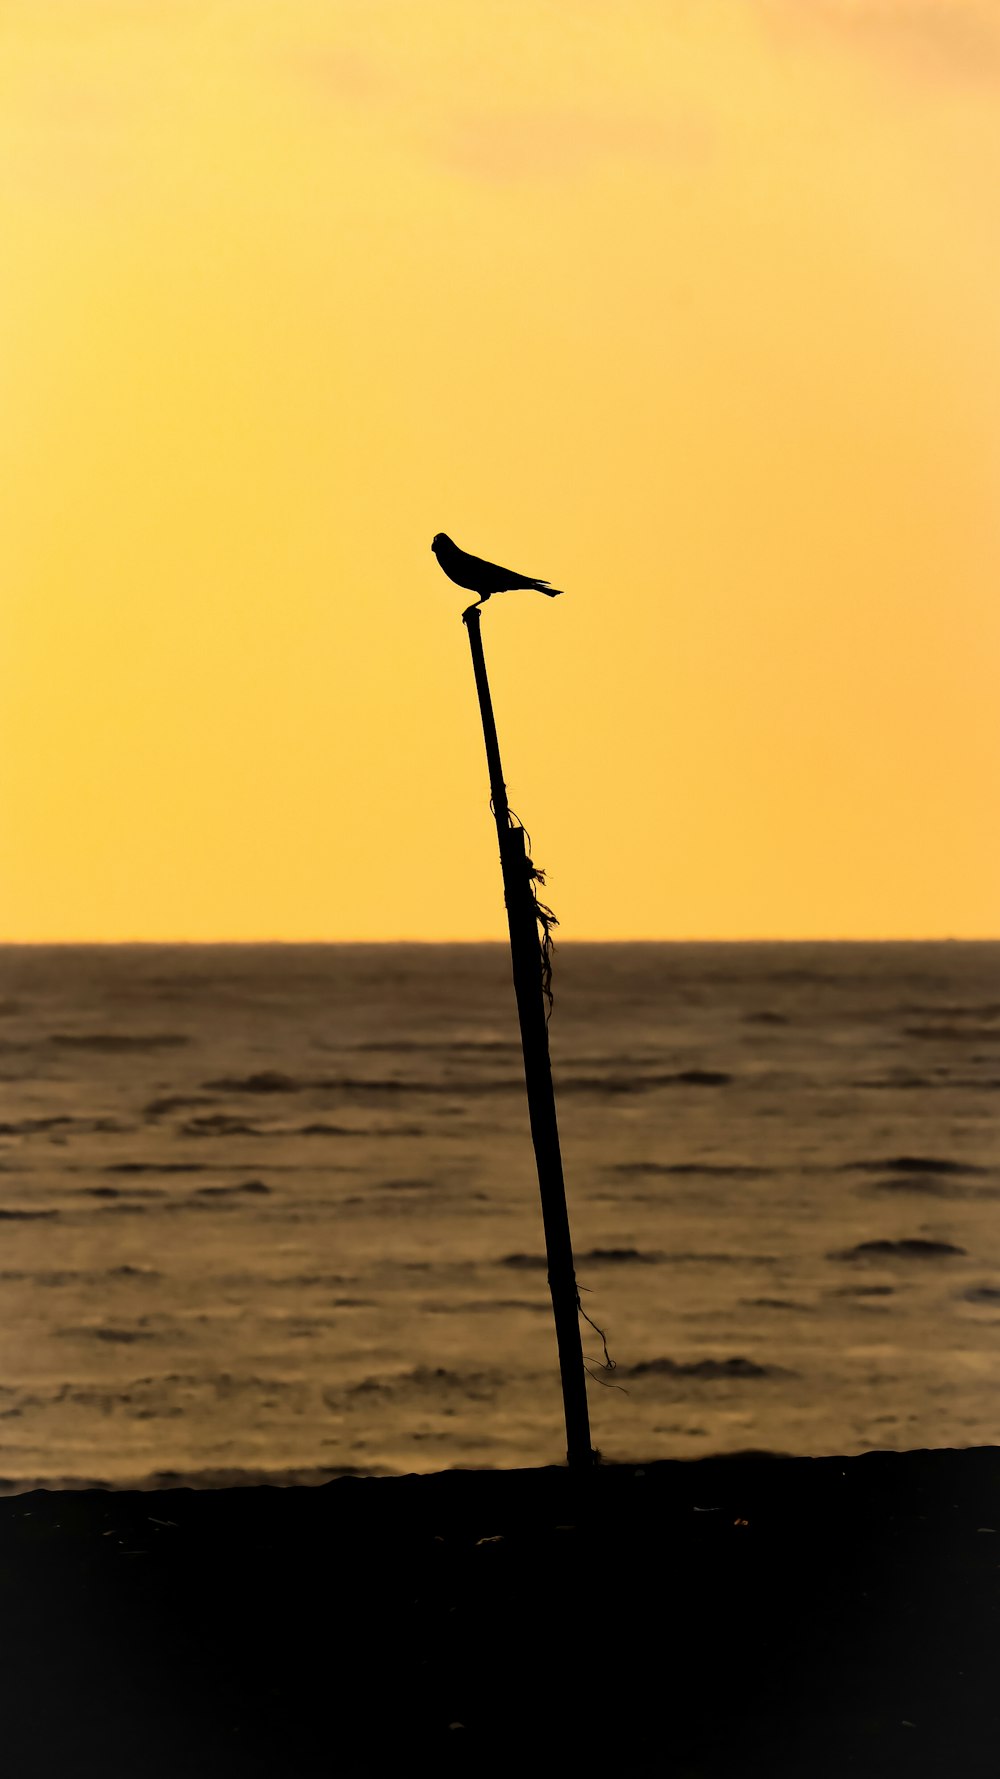 black metal pole near sea during daytime